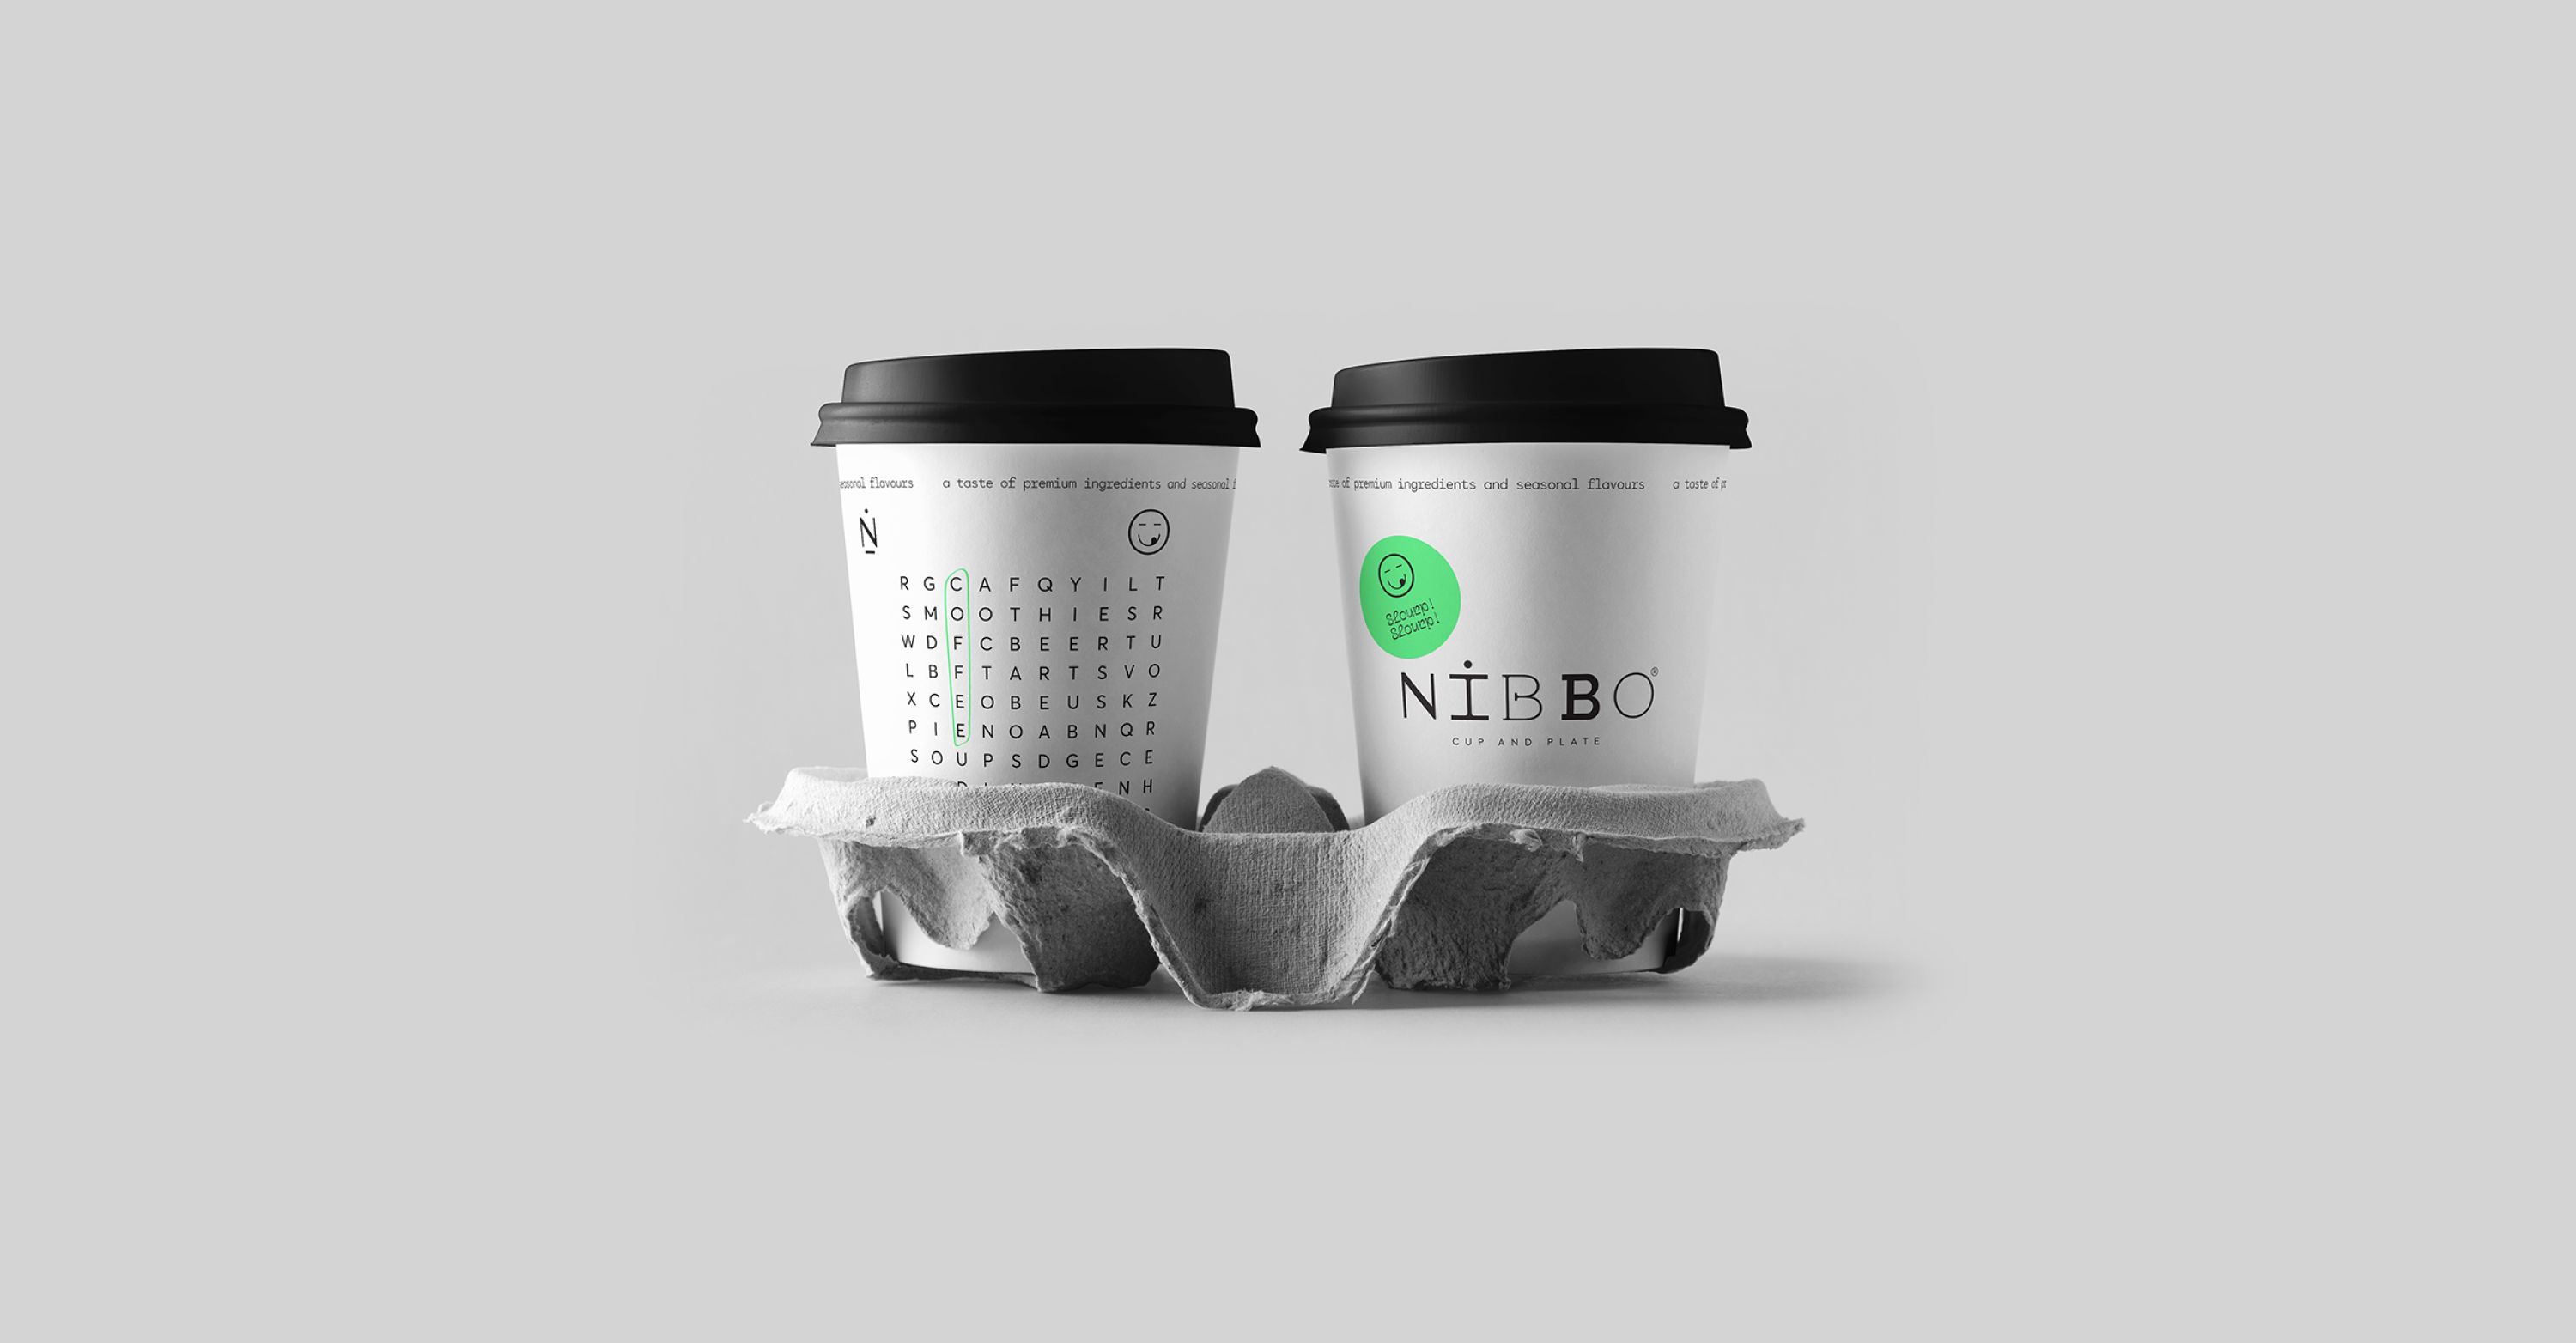 Nibbo Athens - All fay cafe